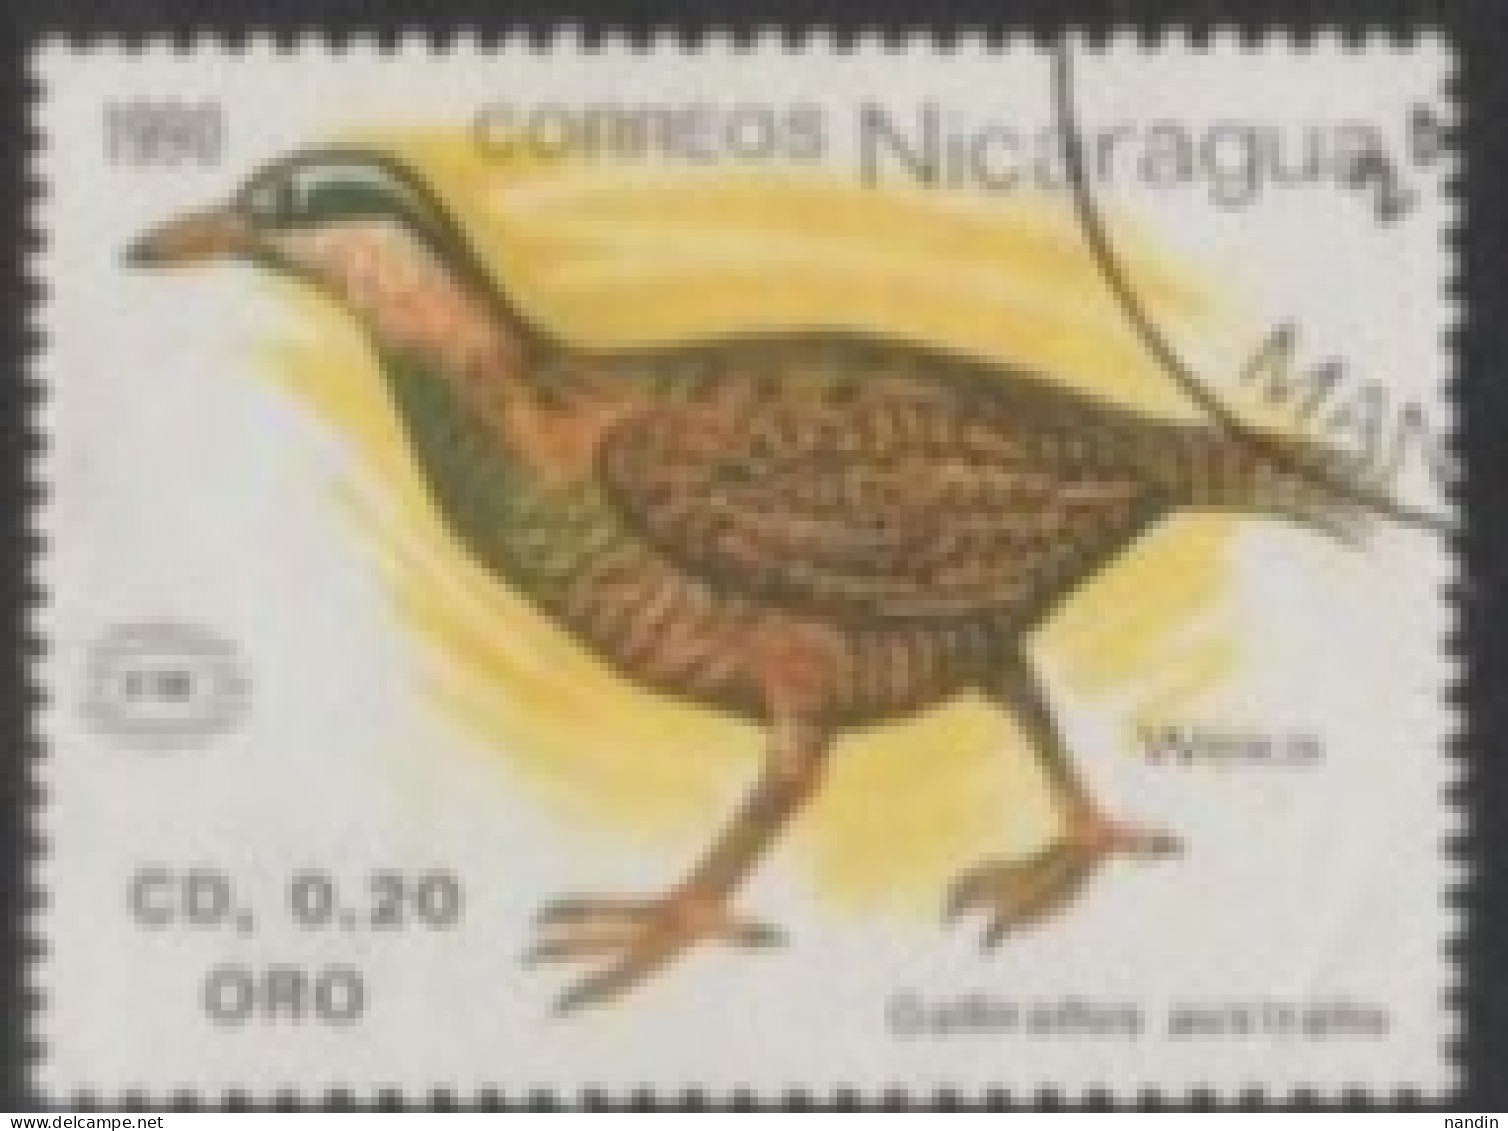 1990 NICARAGUA USED STAMP ON BIRDS/Gallirallus Australis-Genus Of Rails/Int. Stamp Exhibition "NEW ZEALAND '90" BIRD - Hummingbirds